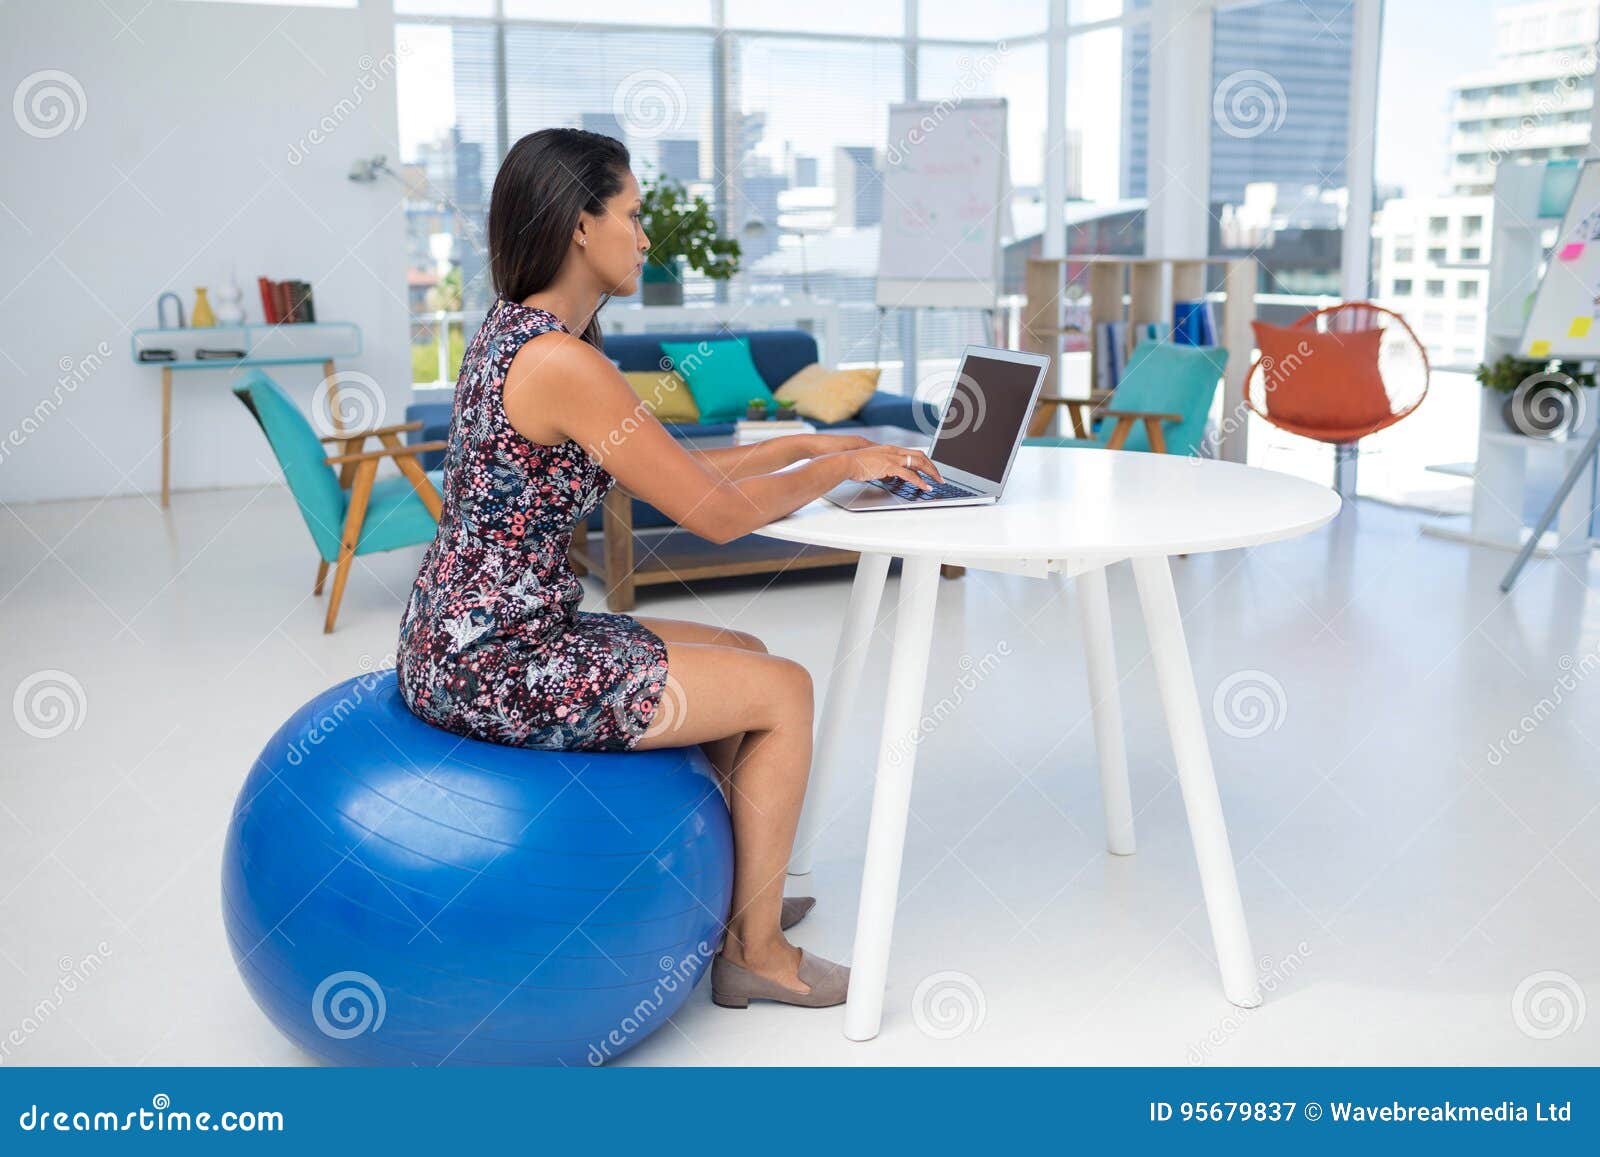 Female Executive Using Laptop While Sitting On Exercise Ball At